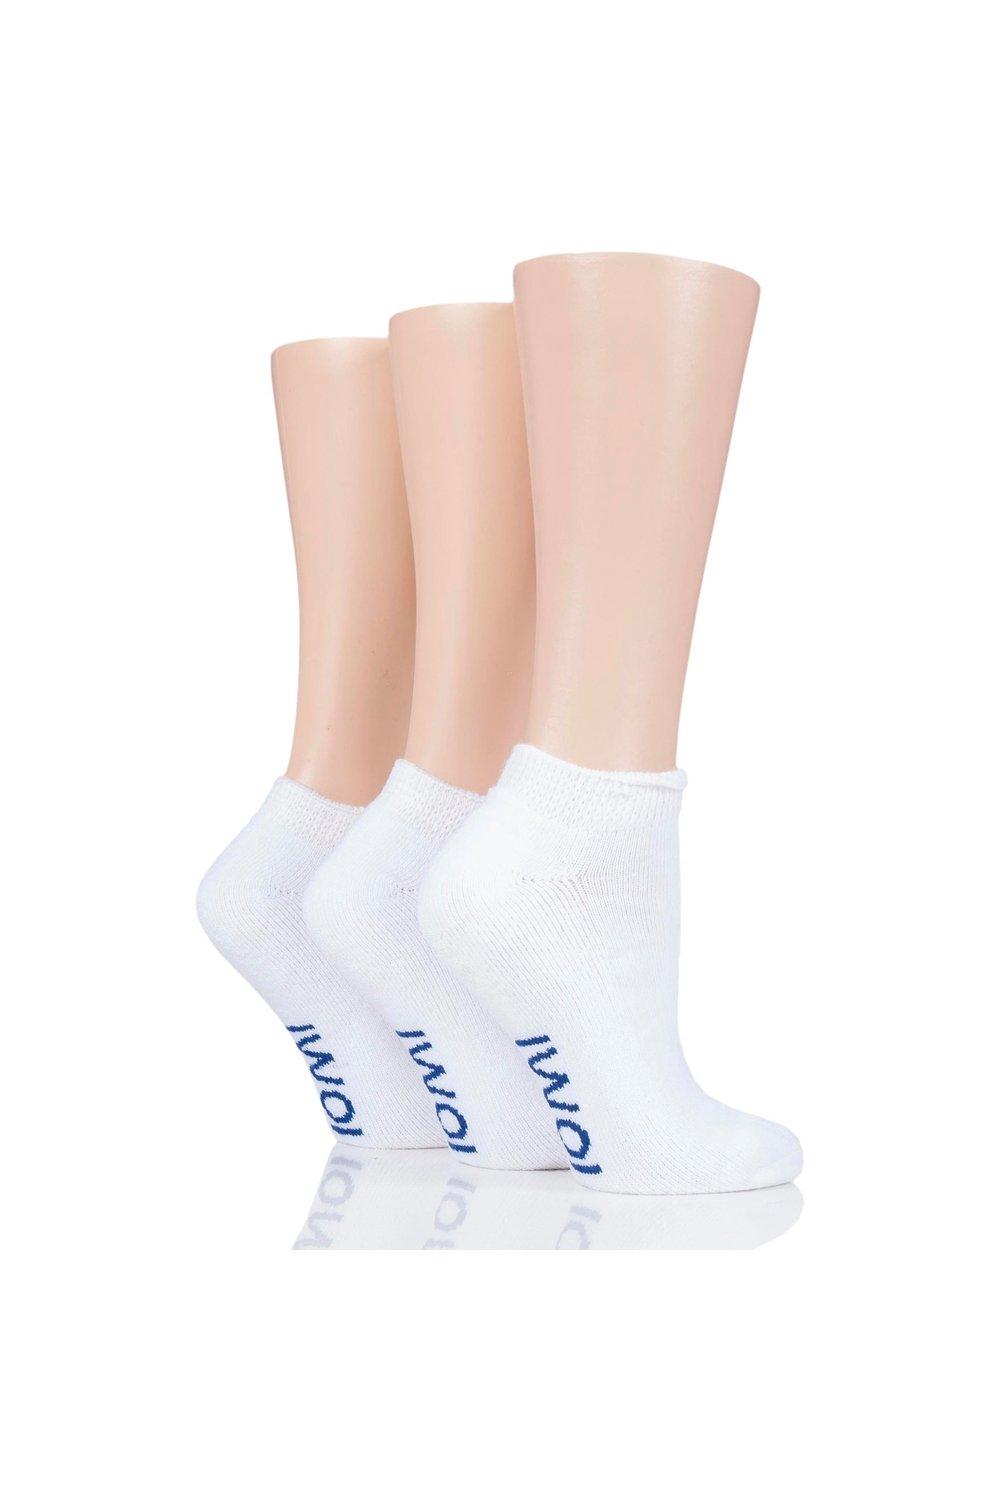 3 Pair Footnurse Cushioned Foot Diabetic Trainer Socks